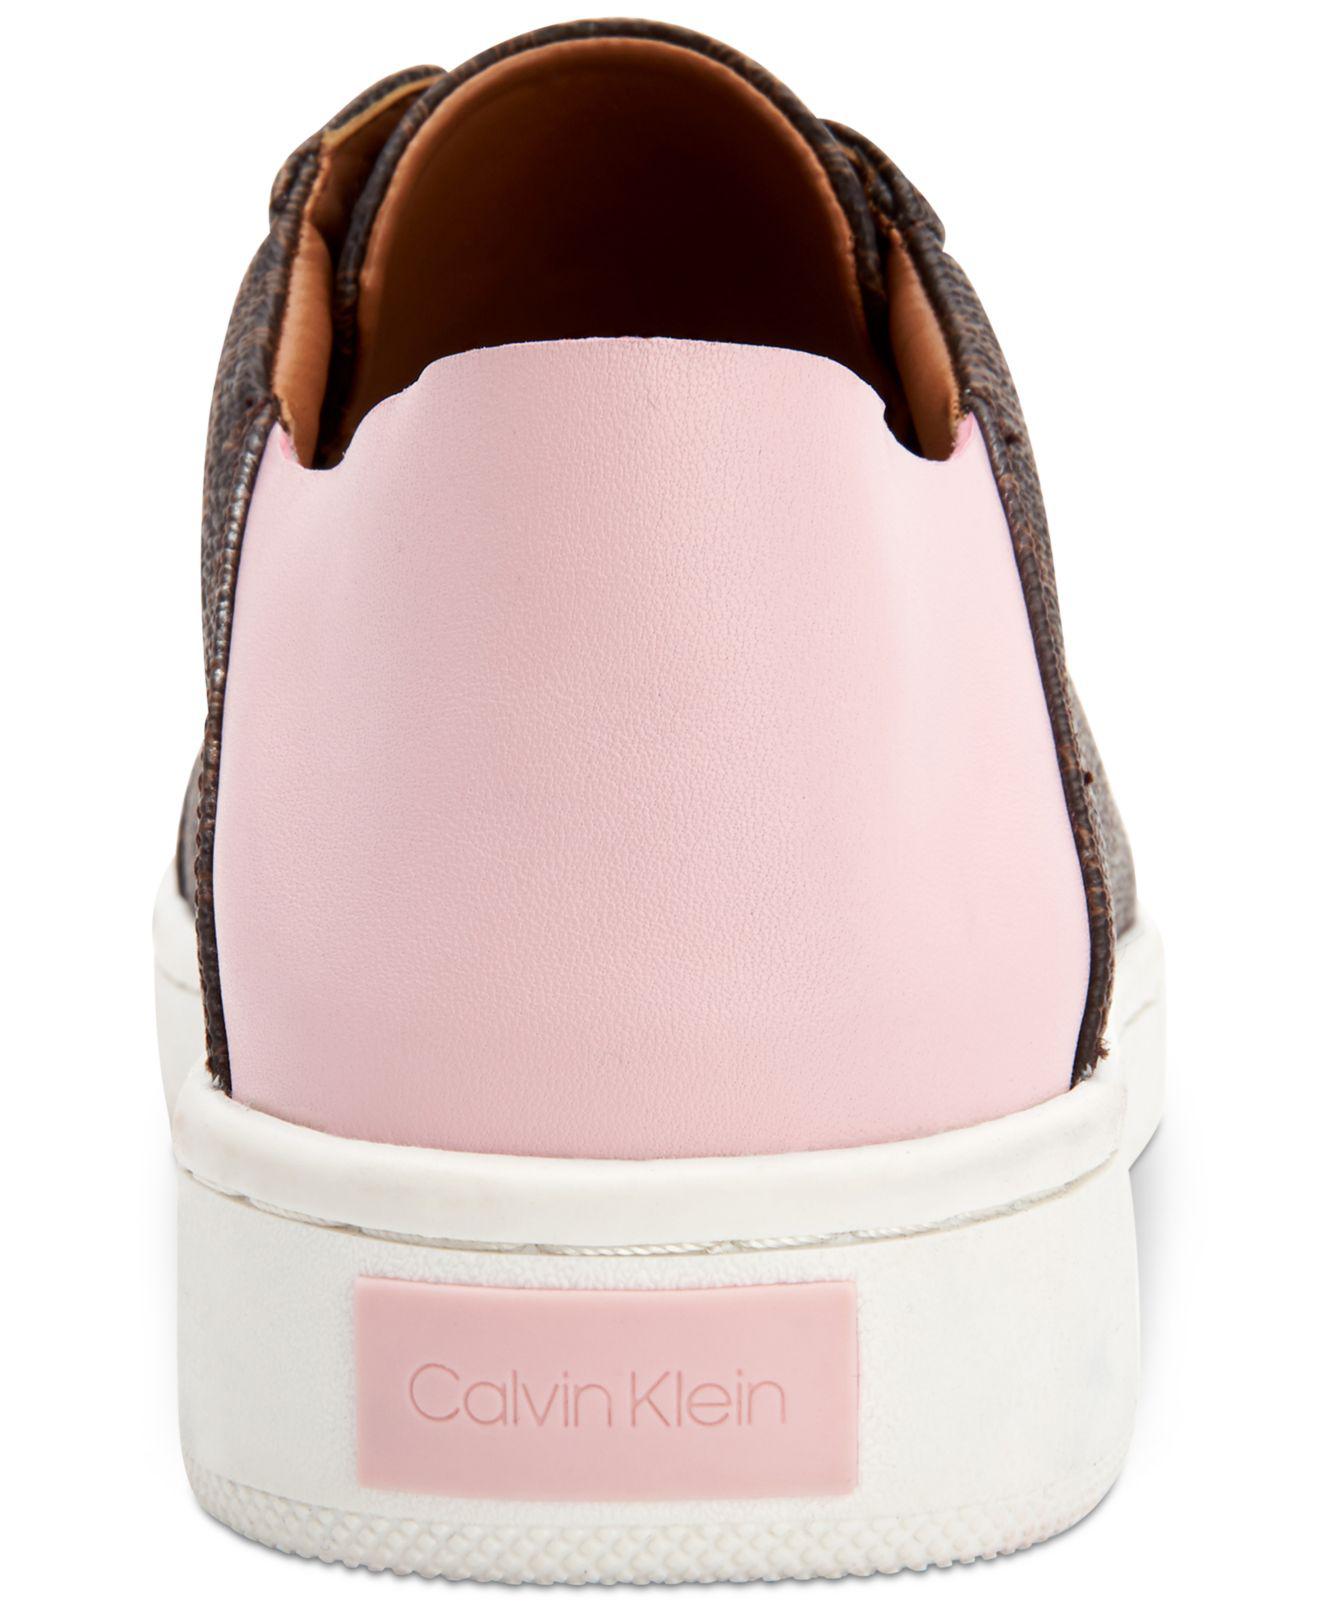 Calvin Klein Leather Convertible Danica 